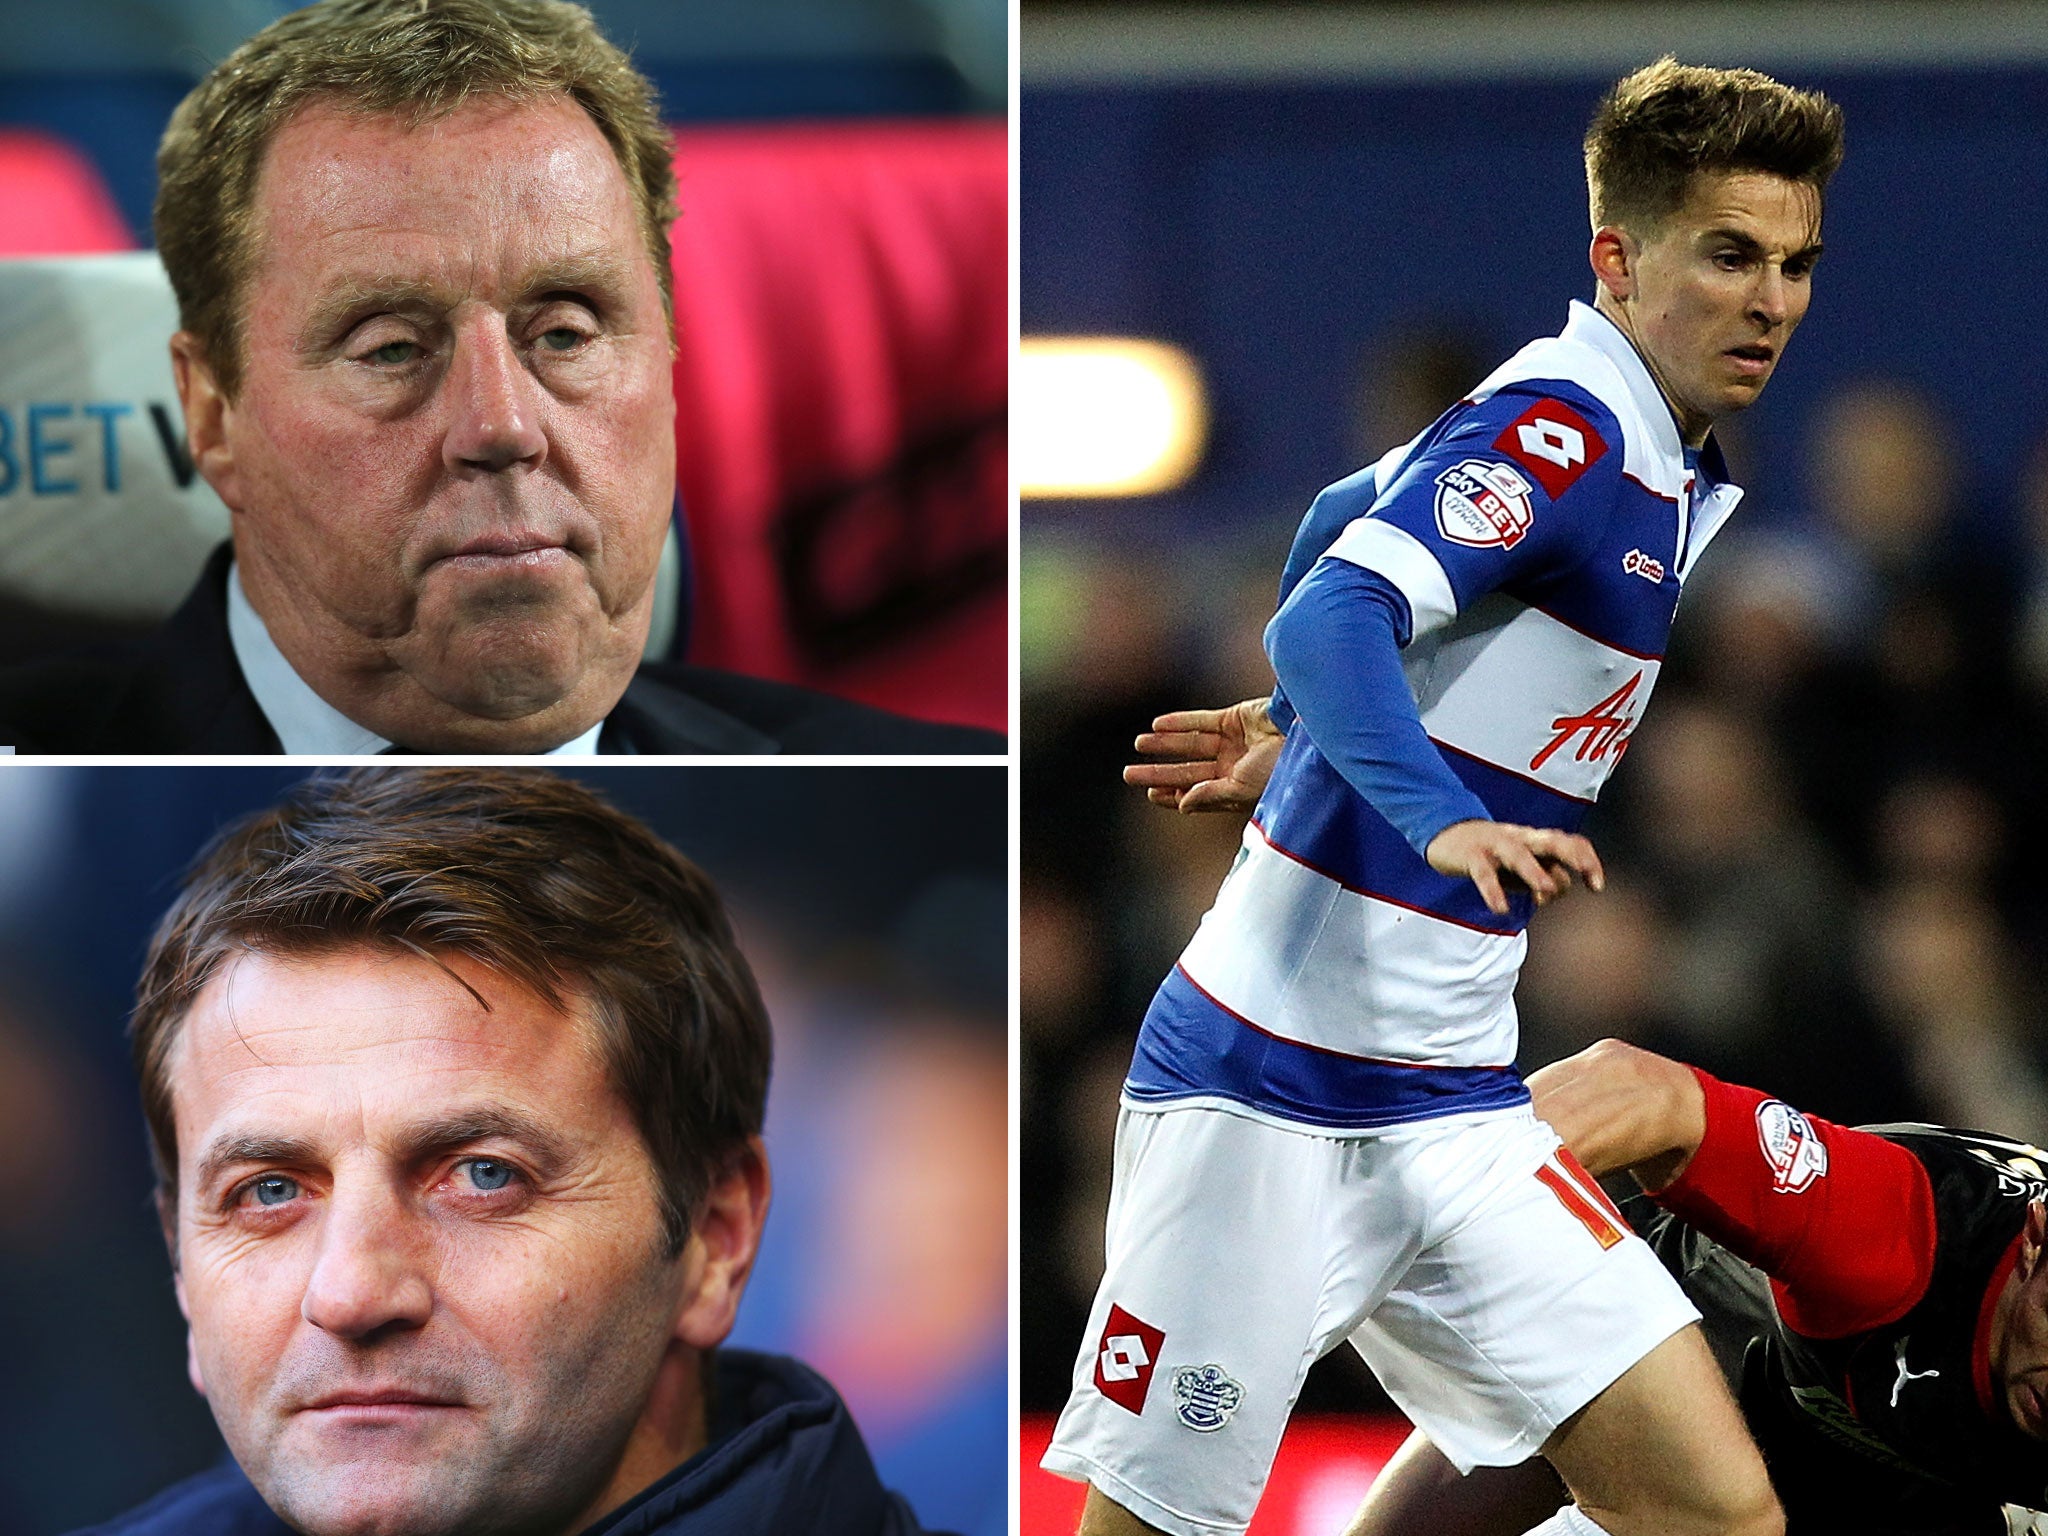 QPR boss Harry Redknapp wants Tottenham decision over Tom Carroll